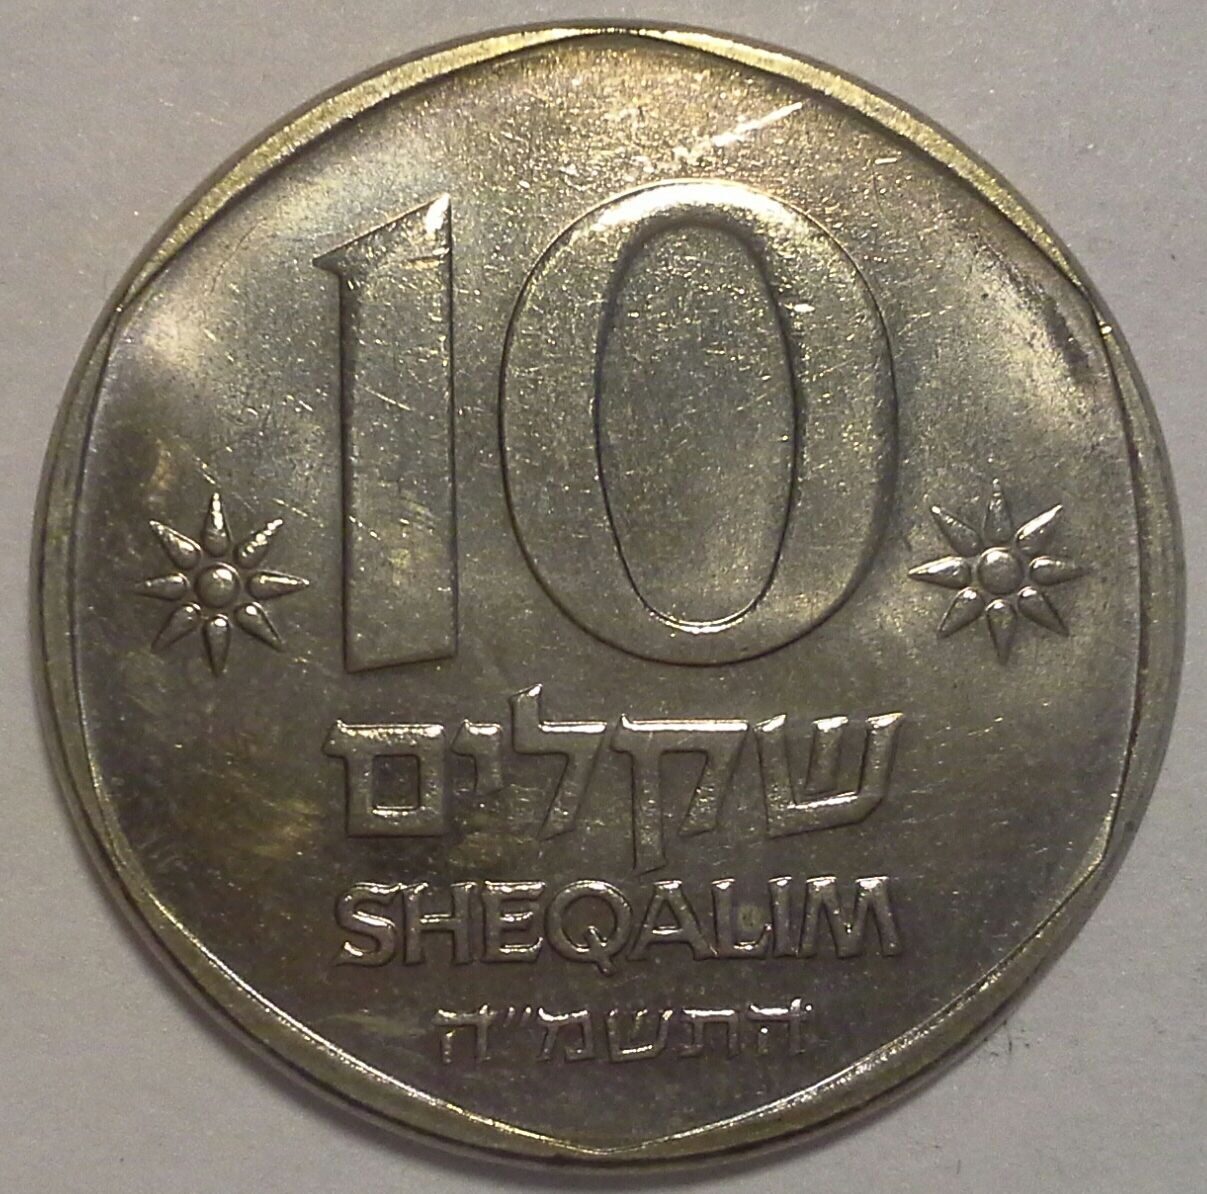 10 Шекелей 1985. 10 Шекелей фото. 10 Шекелей монета. 2 Шекеля в рублях. 2000 шекелей